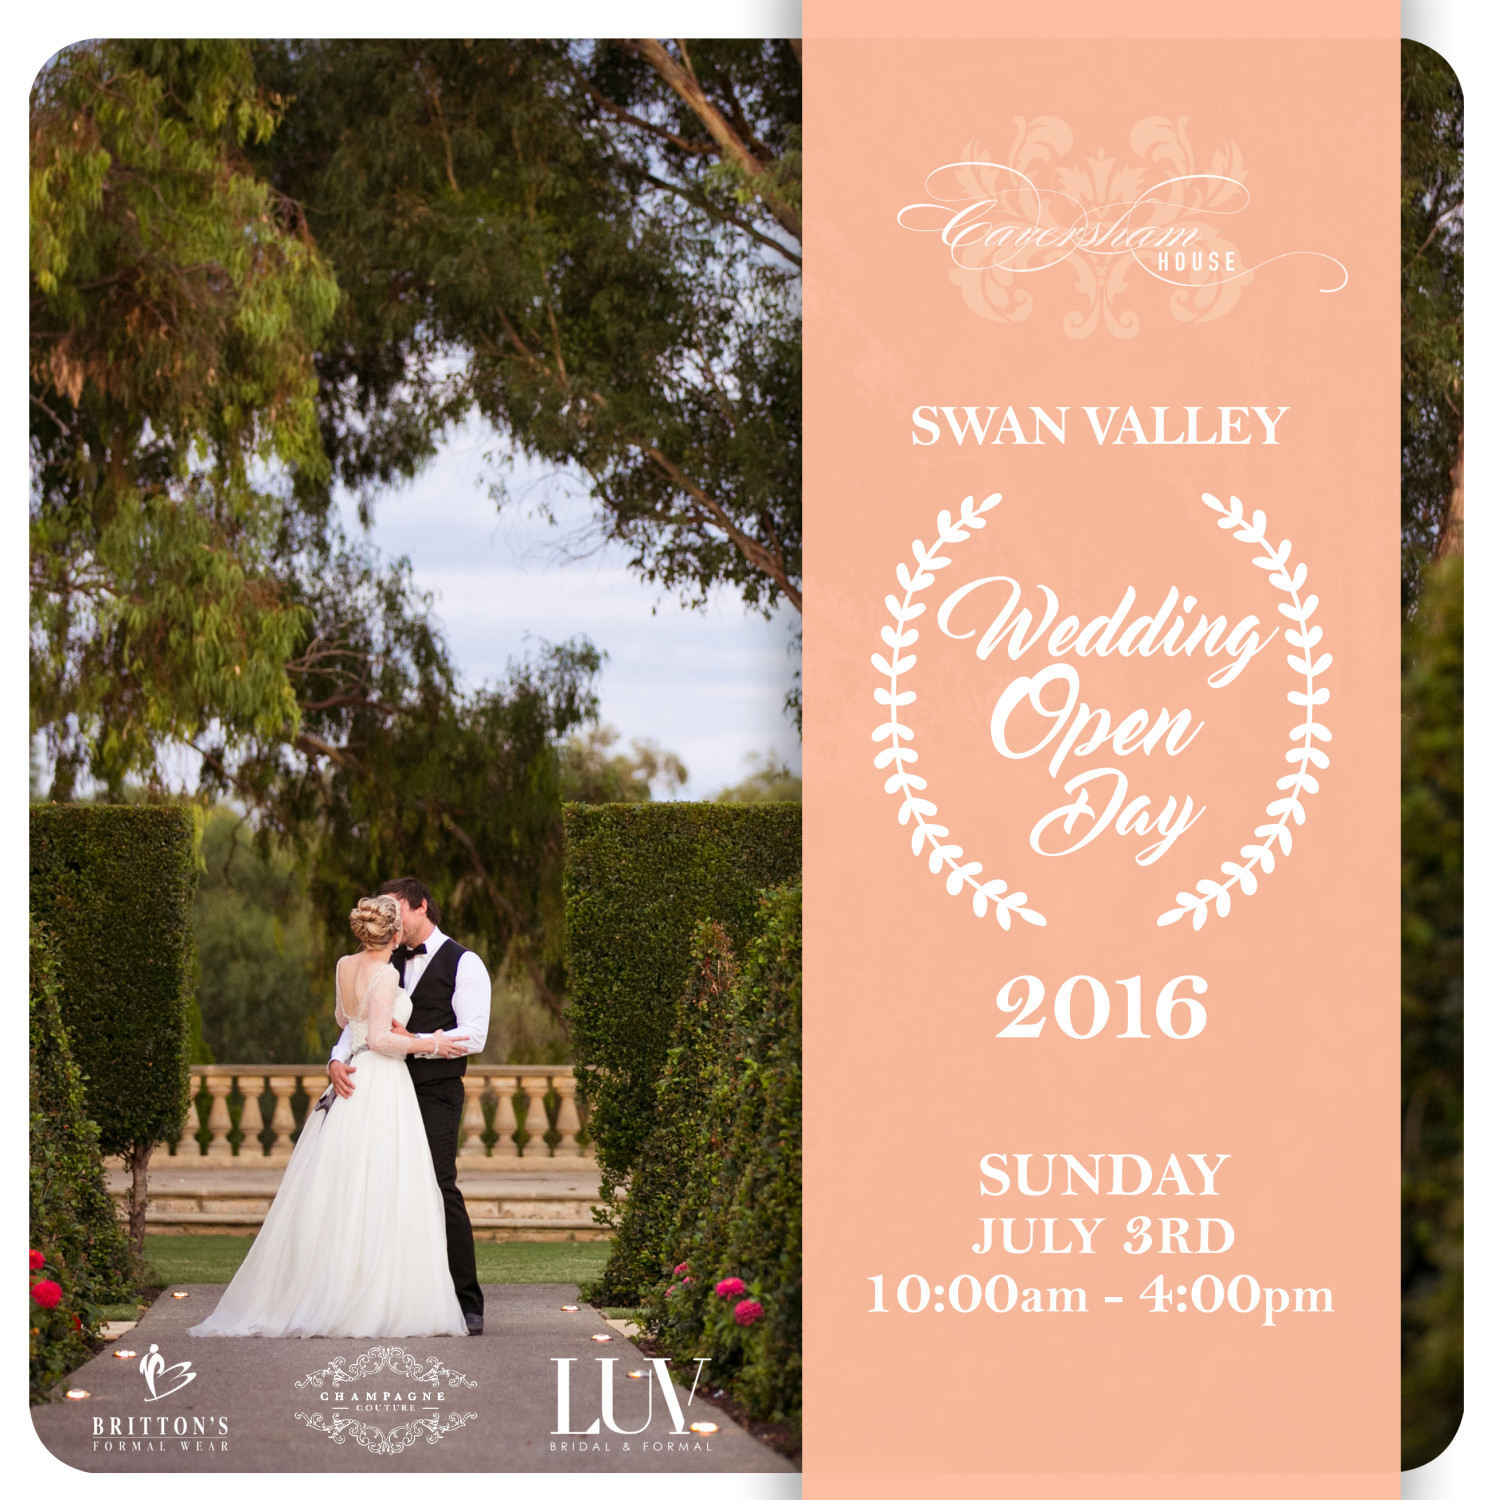 Swan Valley Wedding Open Day